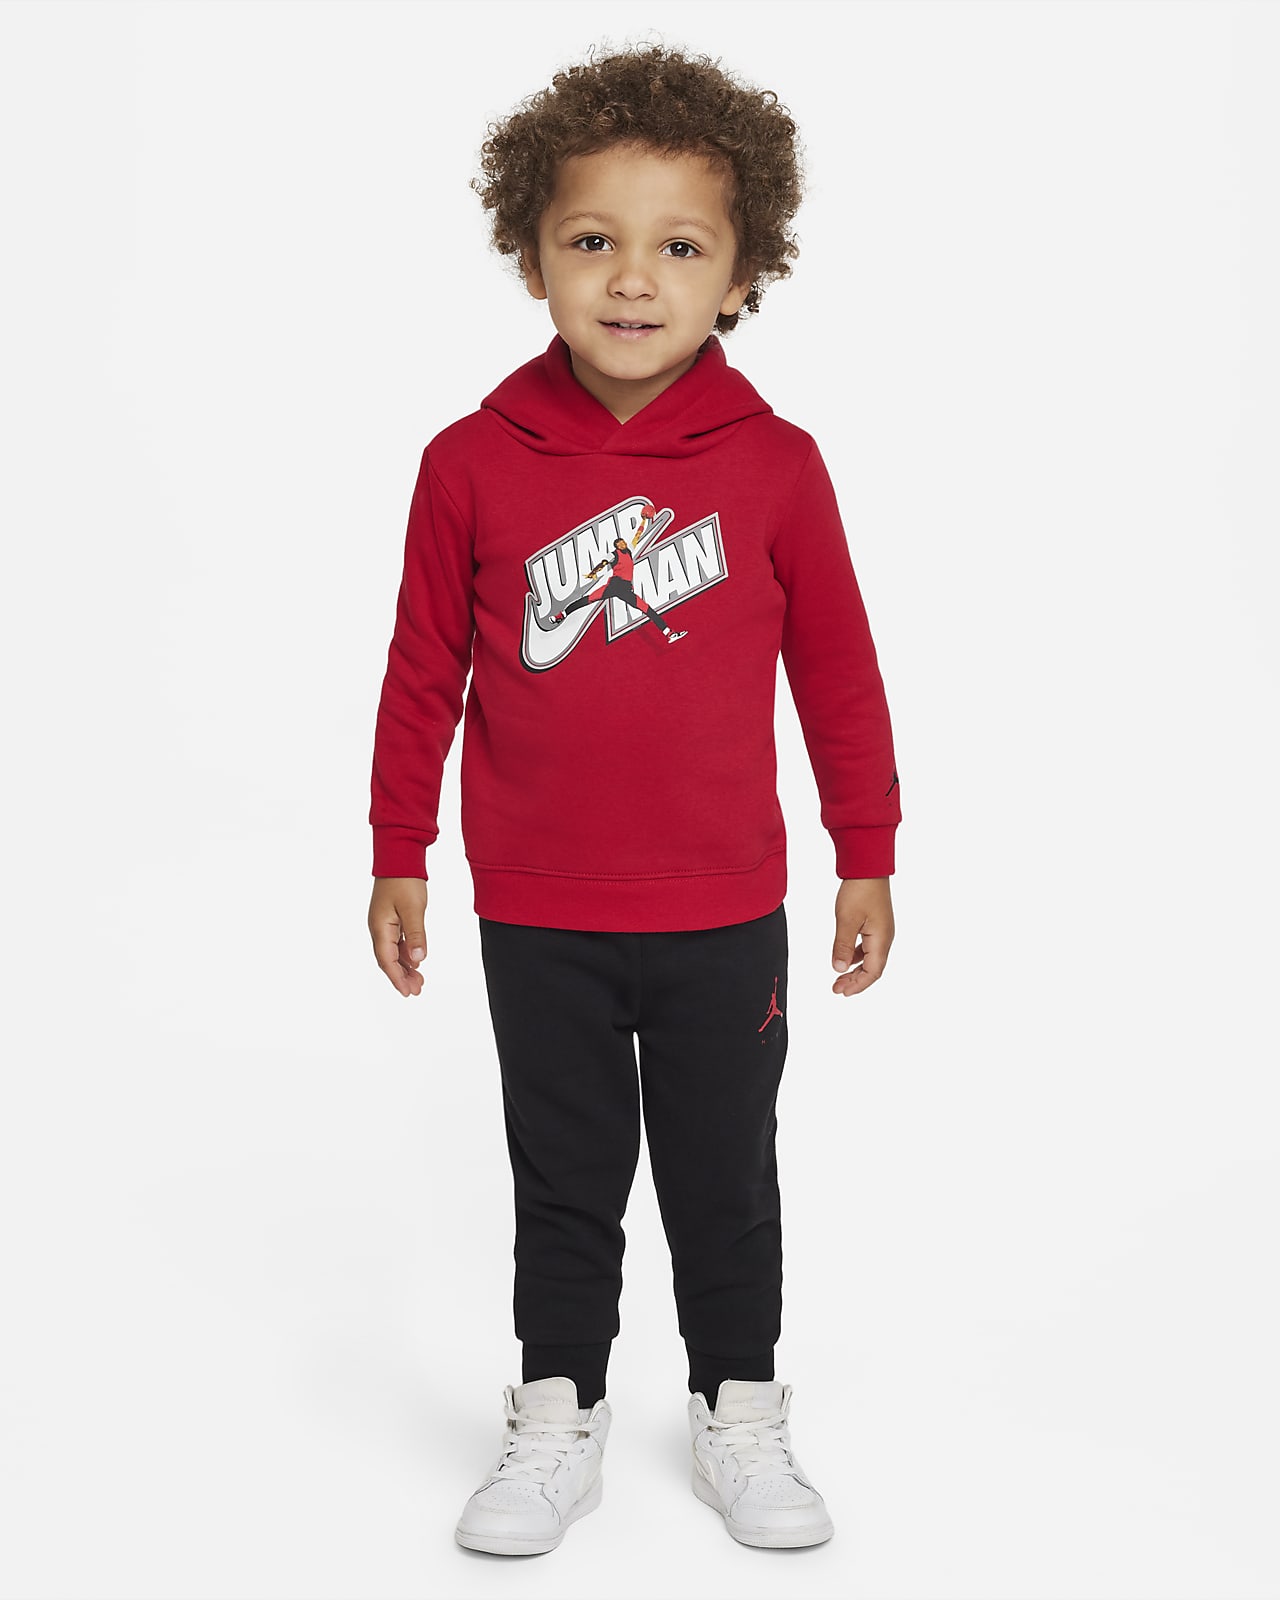 hospita stroomkring bedriegen Jordan Babyset met hoodie en broek (12–24 maanden). Nike NL